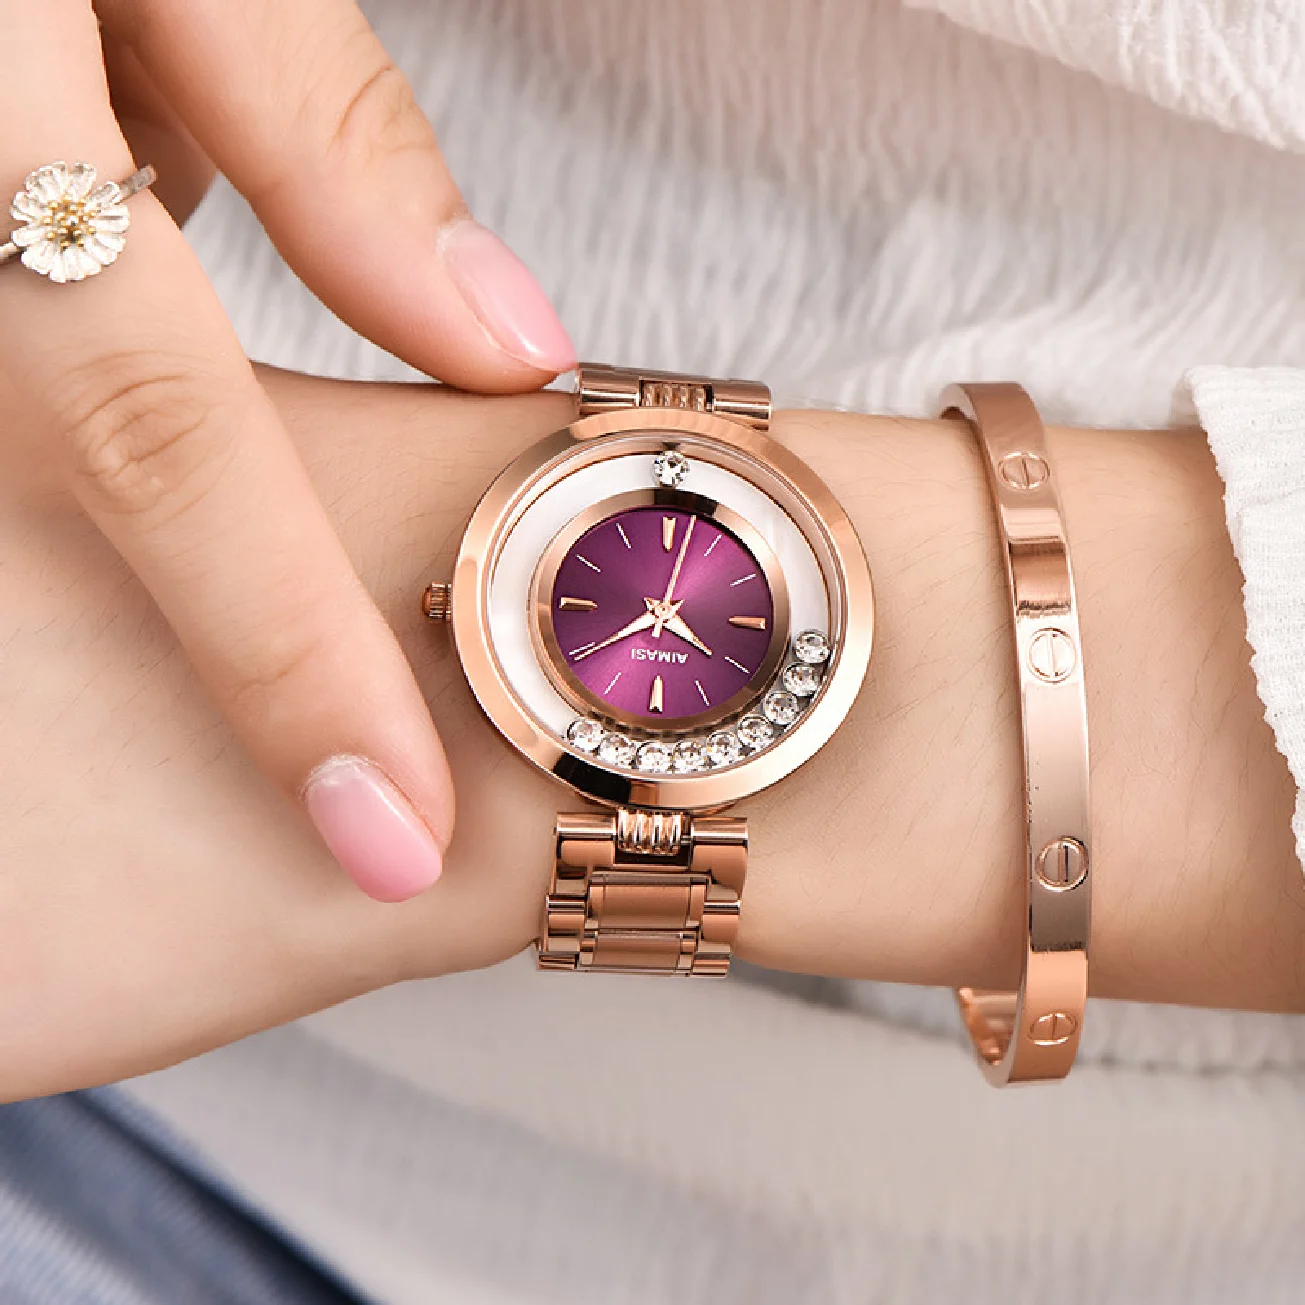 Enlarge AIMASI Brand Women's Watches Ladies Fashion Luxury Rose Gold Stainless Steel Watches Ball crystal Women Rhinestone Clocks saat